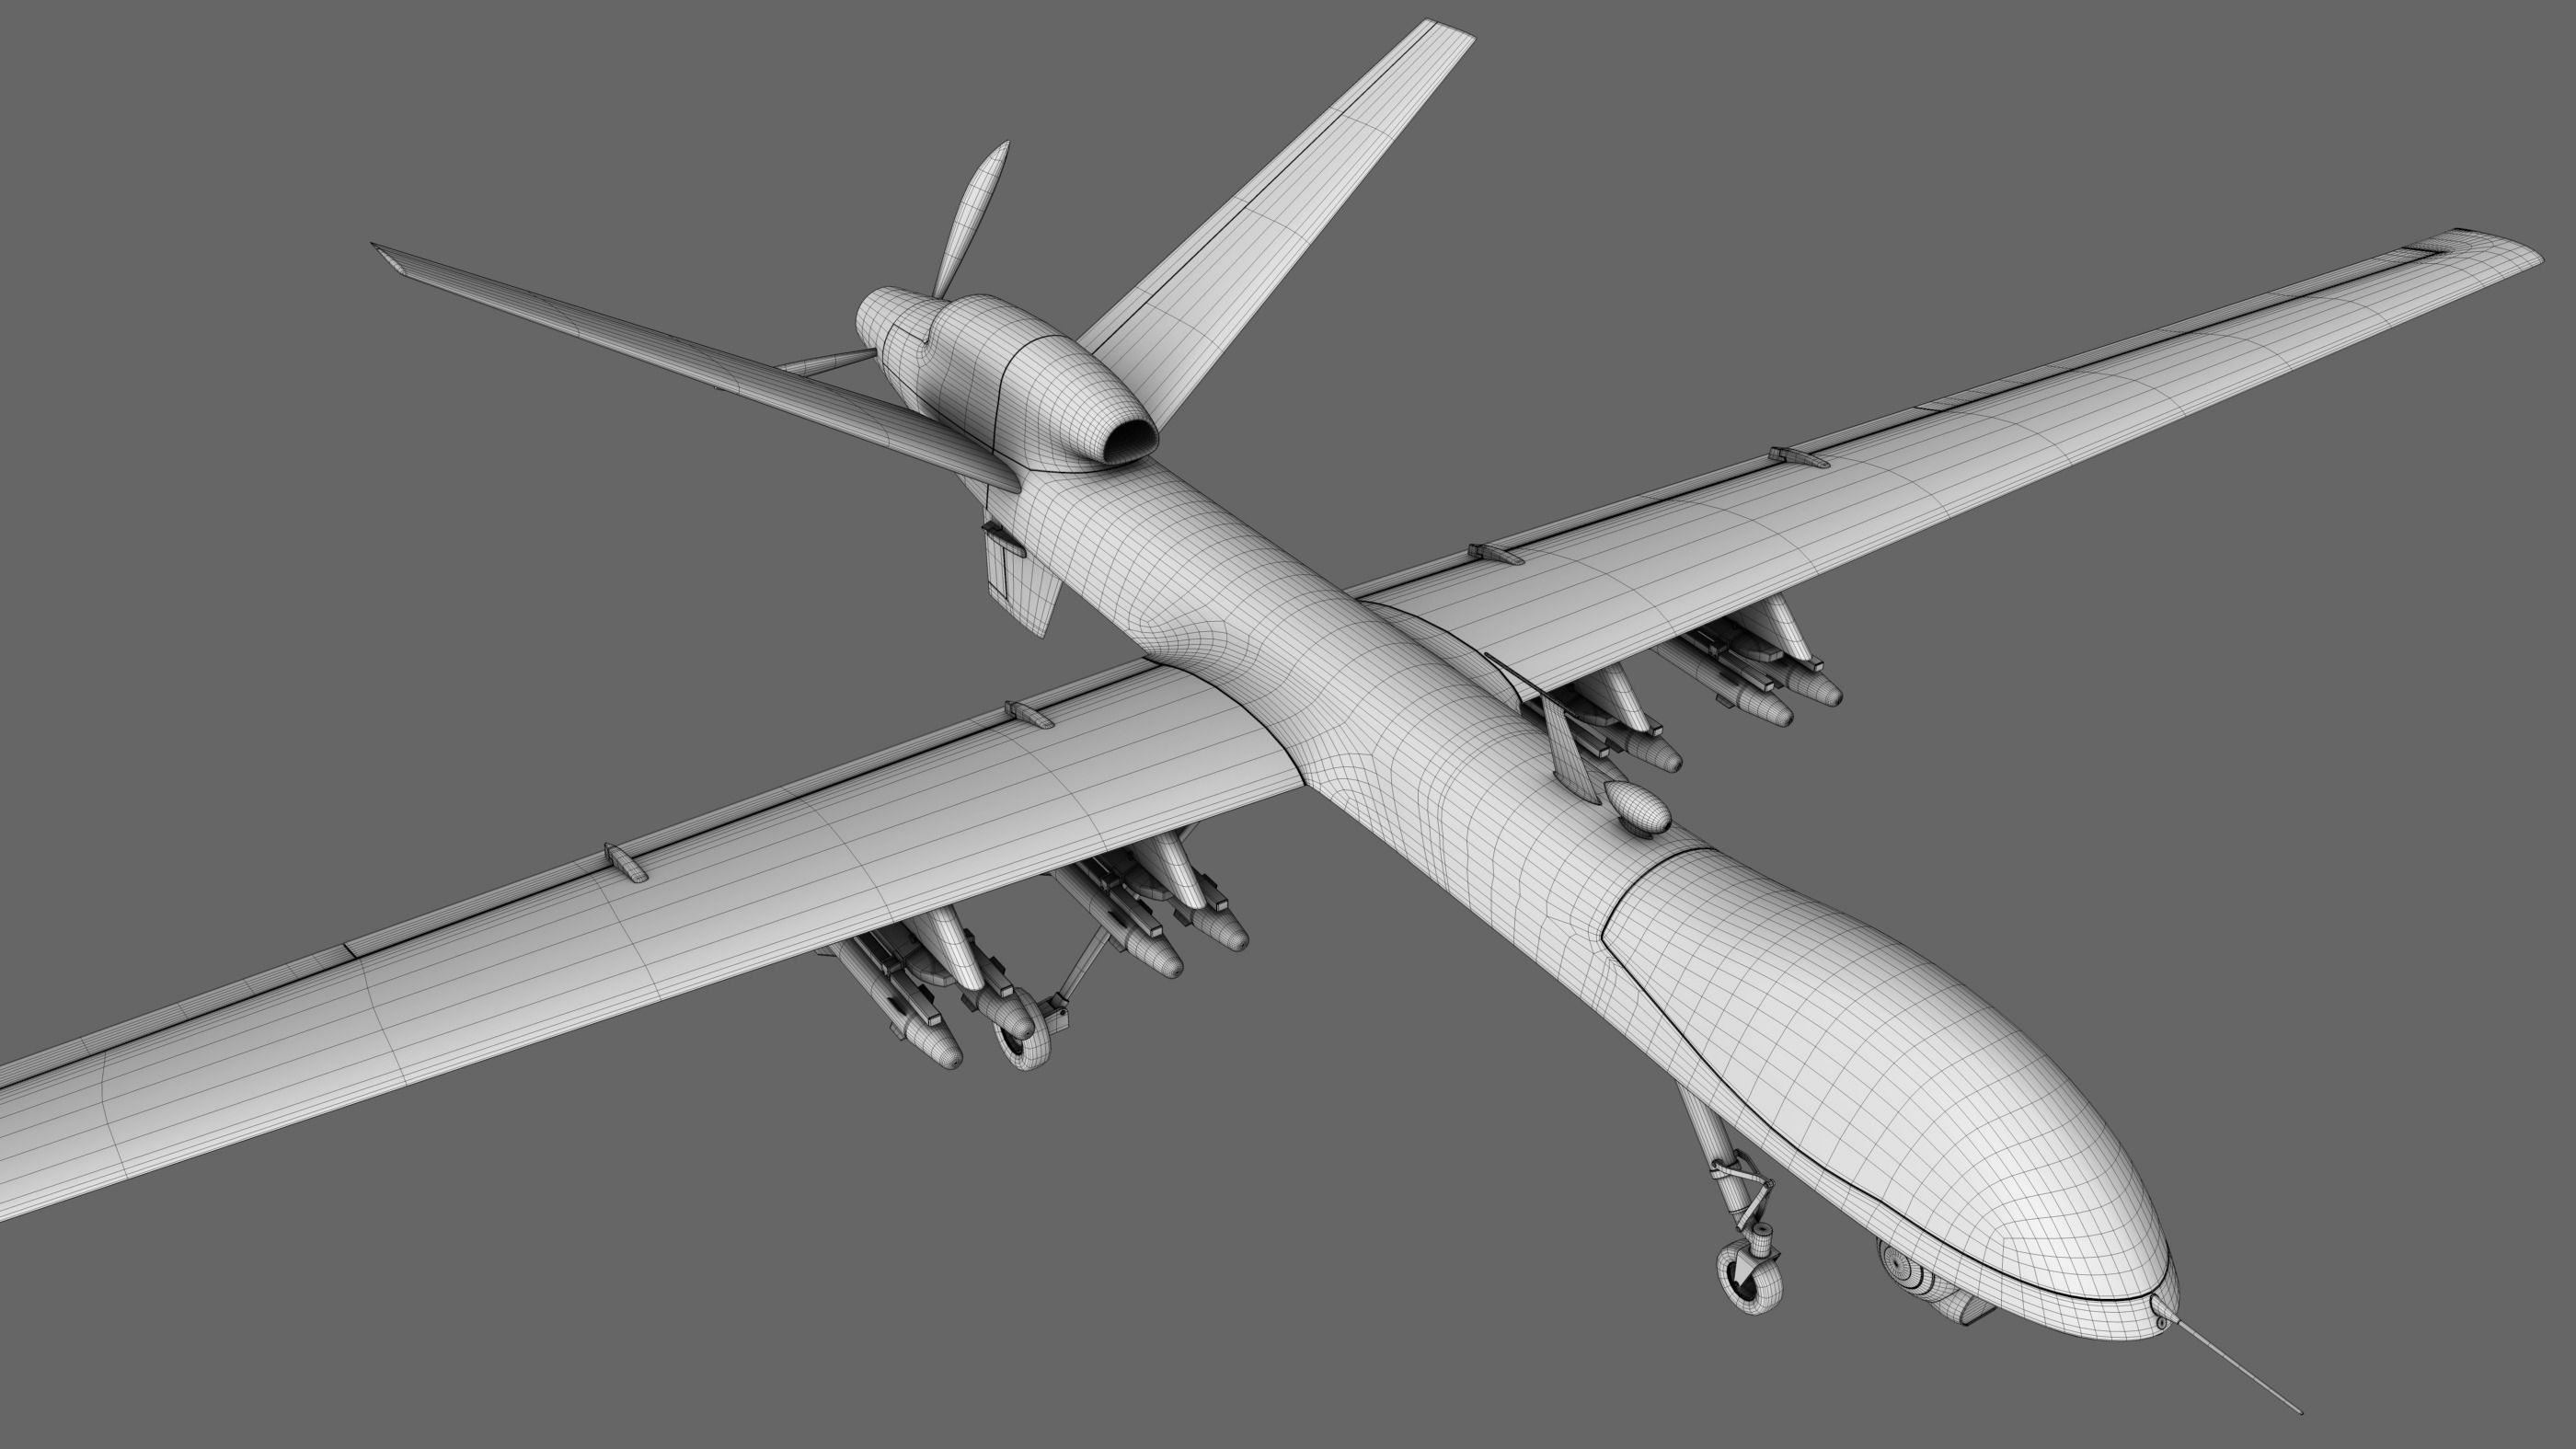 Американский «жнец» бпла mq-9 reaper: преимущества и характеристики ударного дрона